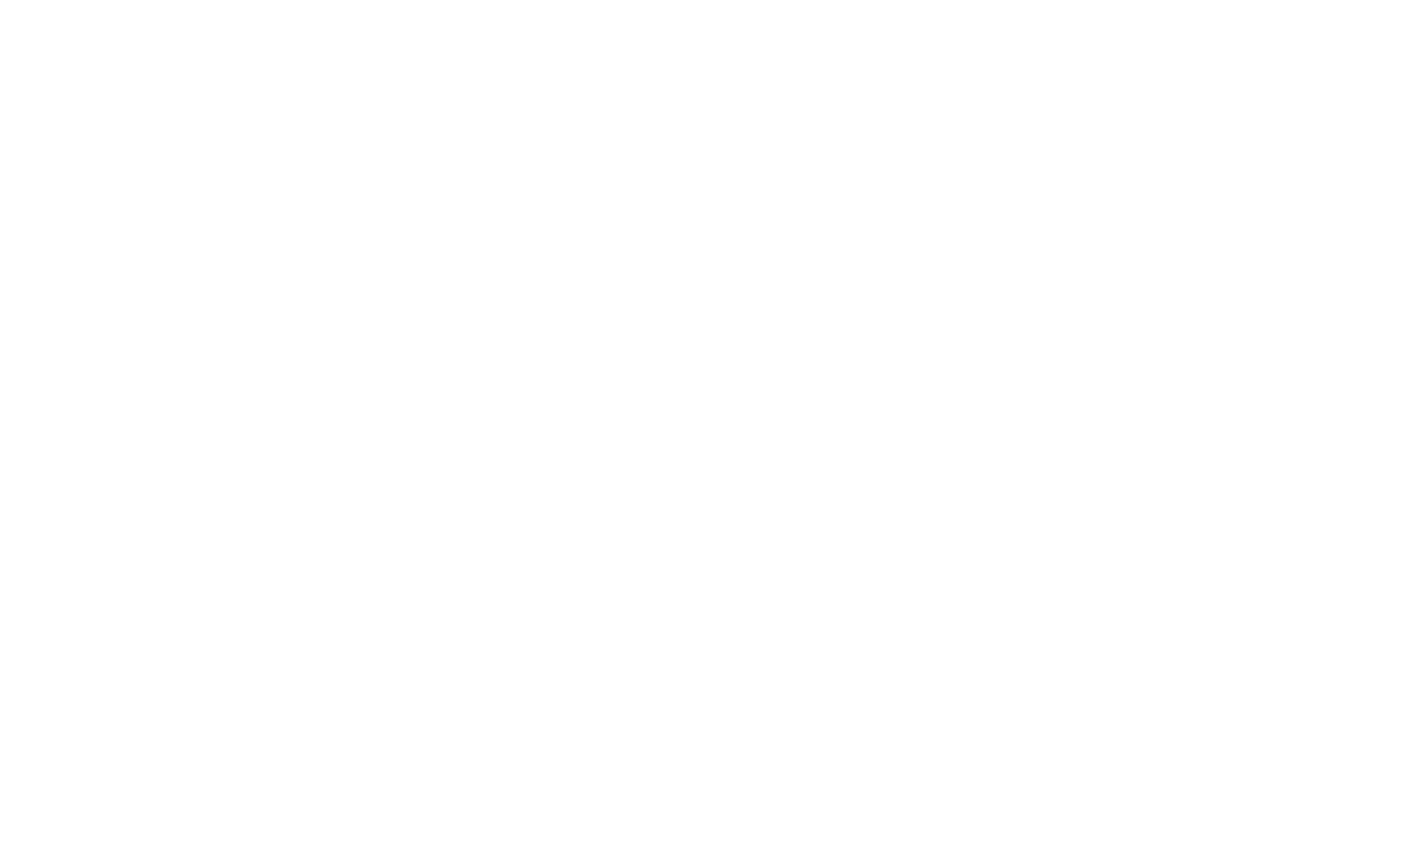 UPDATE THE WORLD